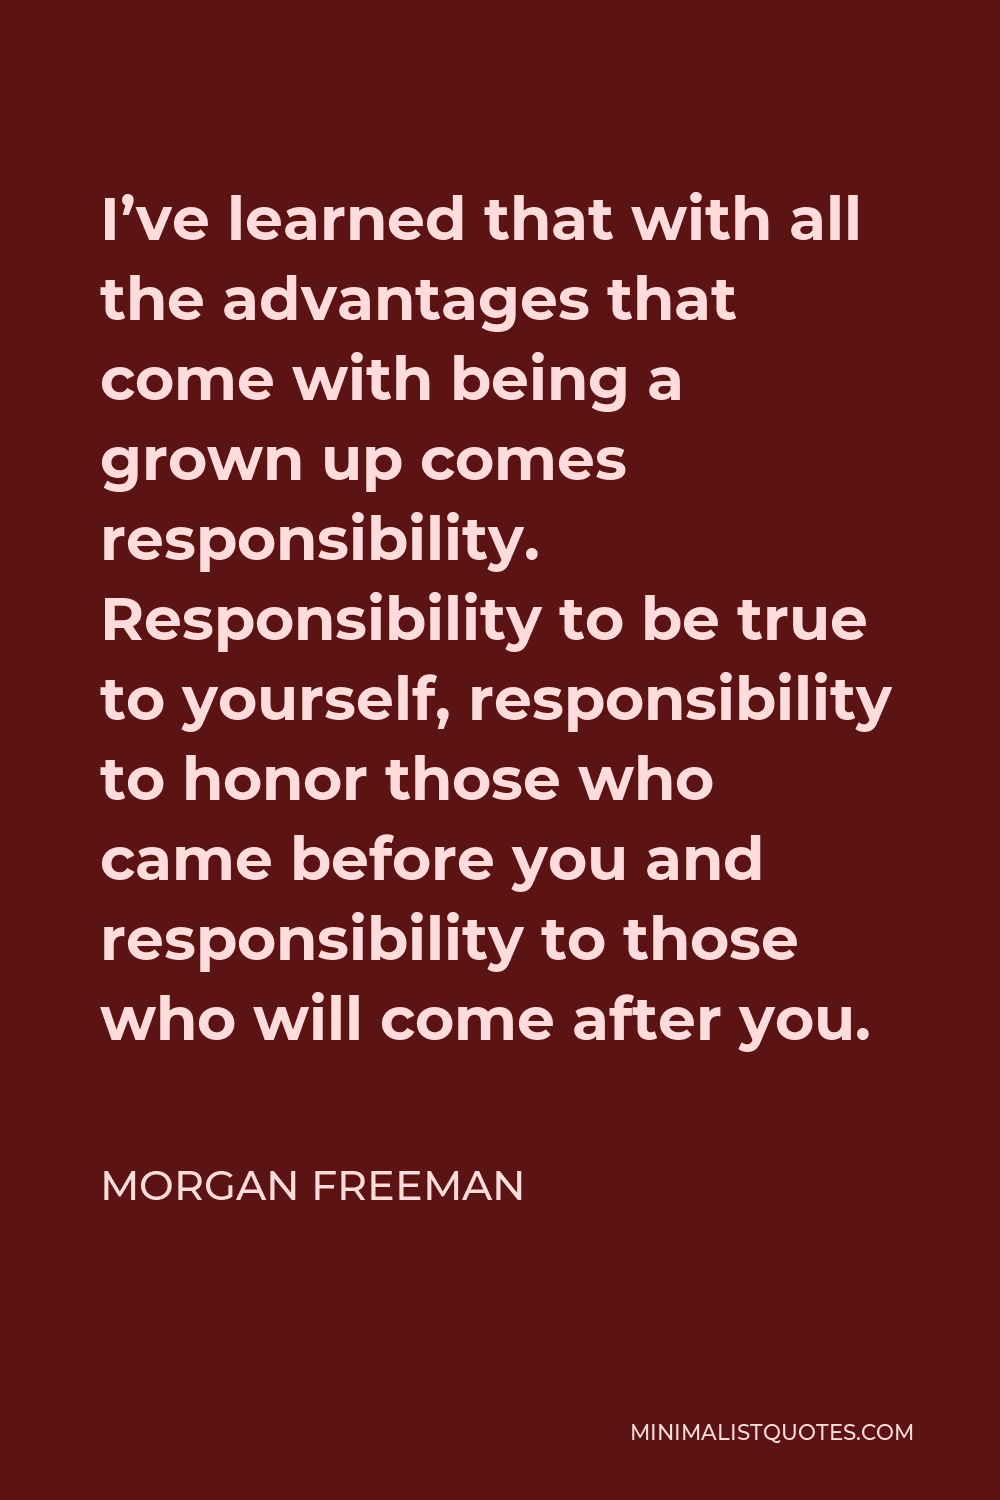 Morgan Freeman: What I've Learned